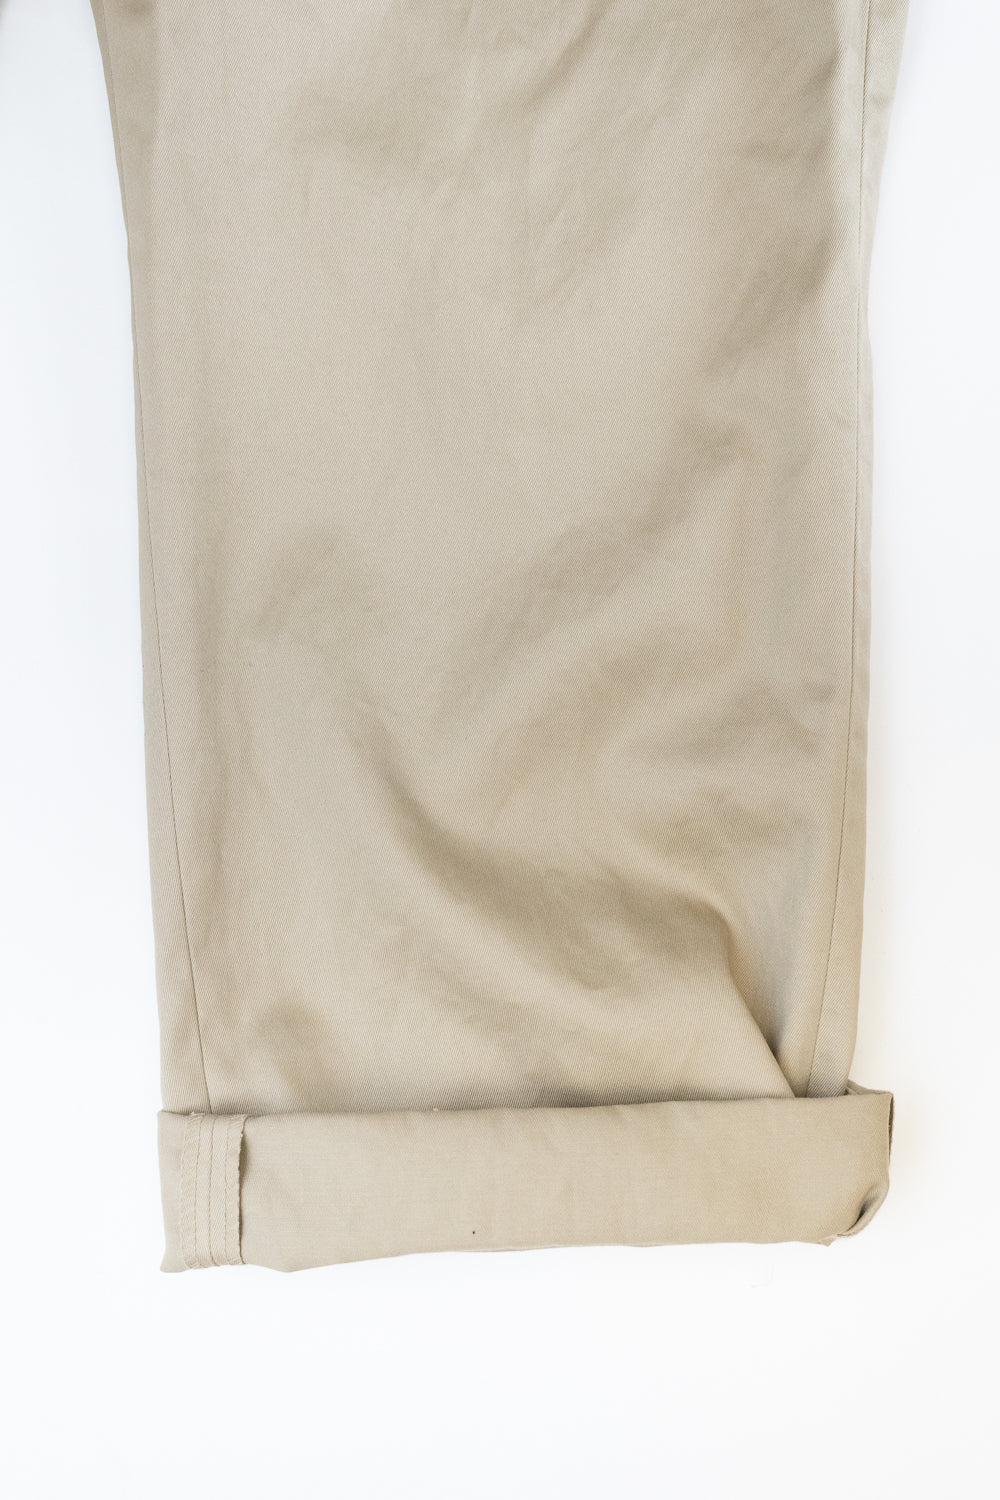 03-V5361-40 - Army Trouser Vintage Fit - Khaki